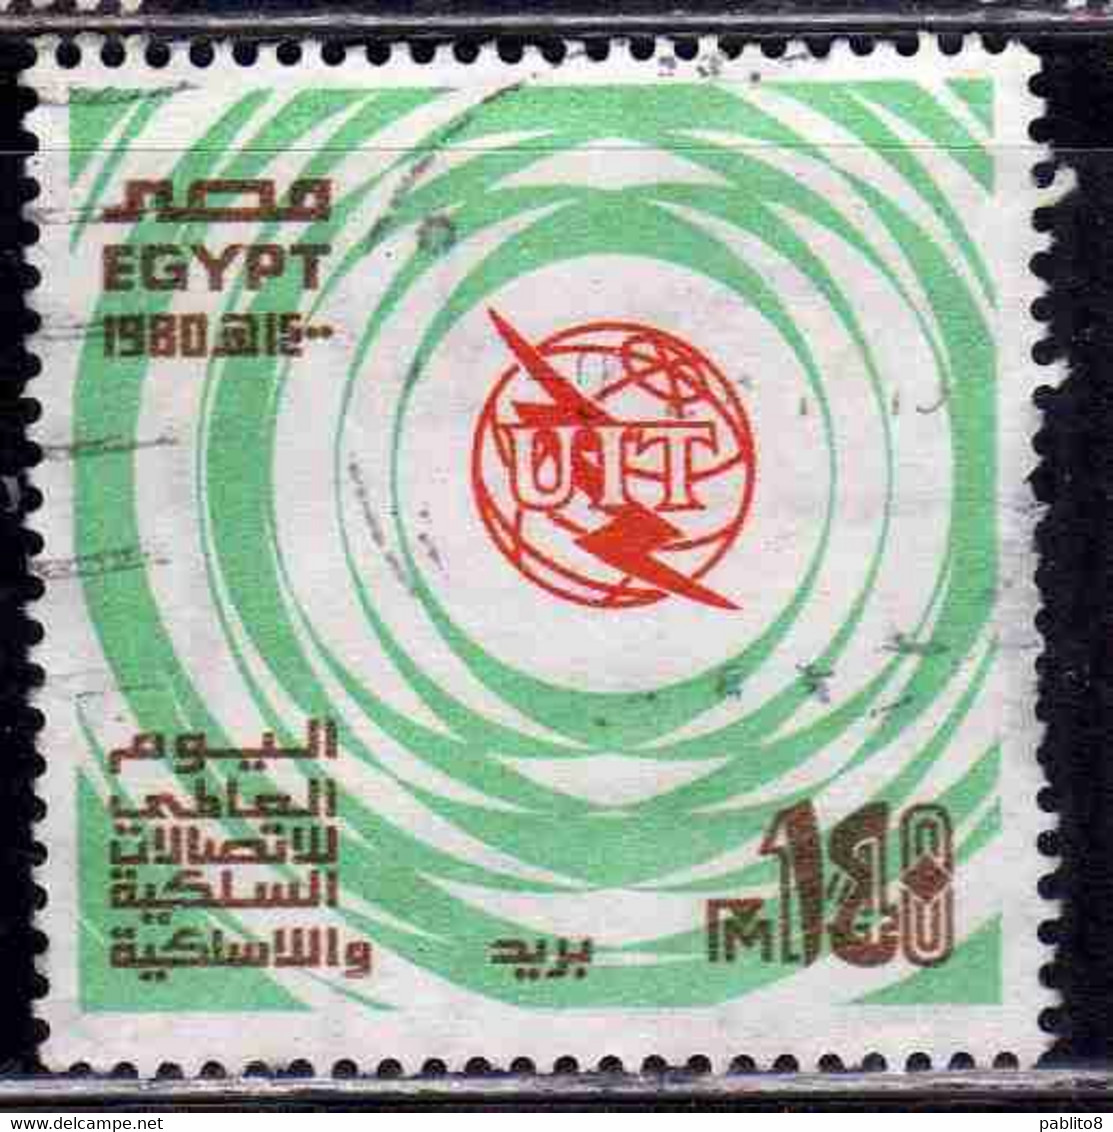 UAR EGYPT EGITTO 1980 UN ONU DAY INTERNATIONAL TELECOMMUNICATIONS DAY UNION 140m USED USATO OBLITERE' - Usati